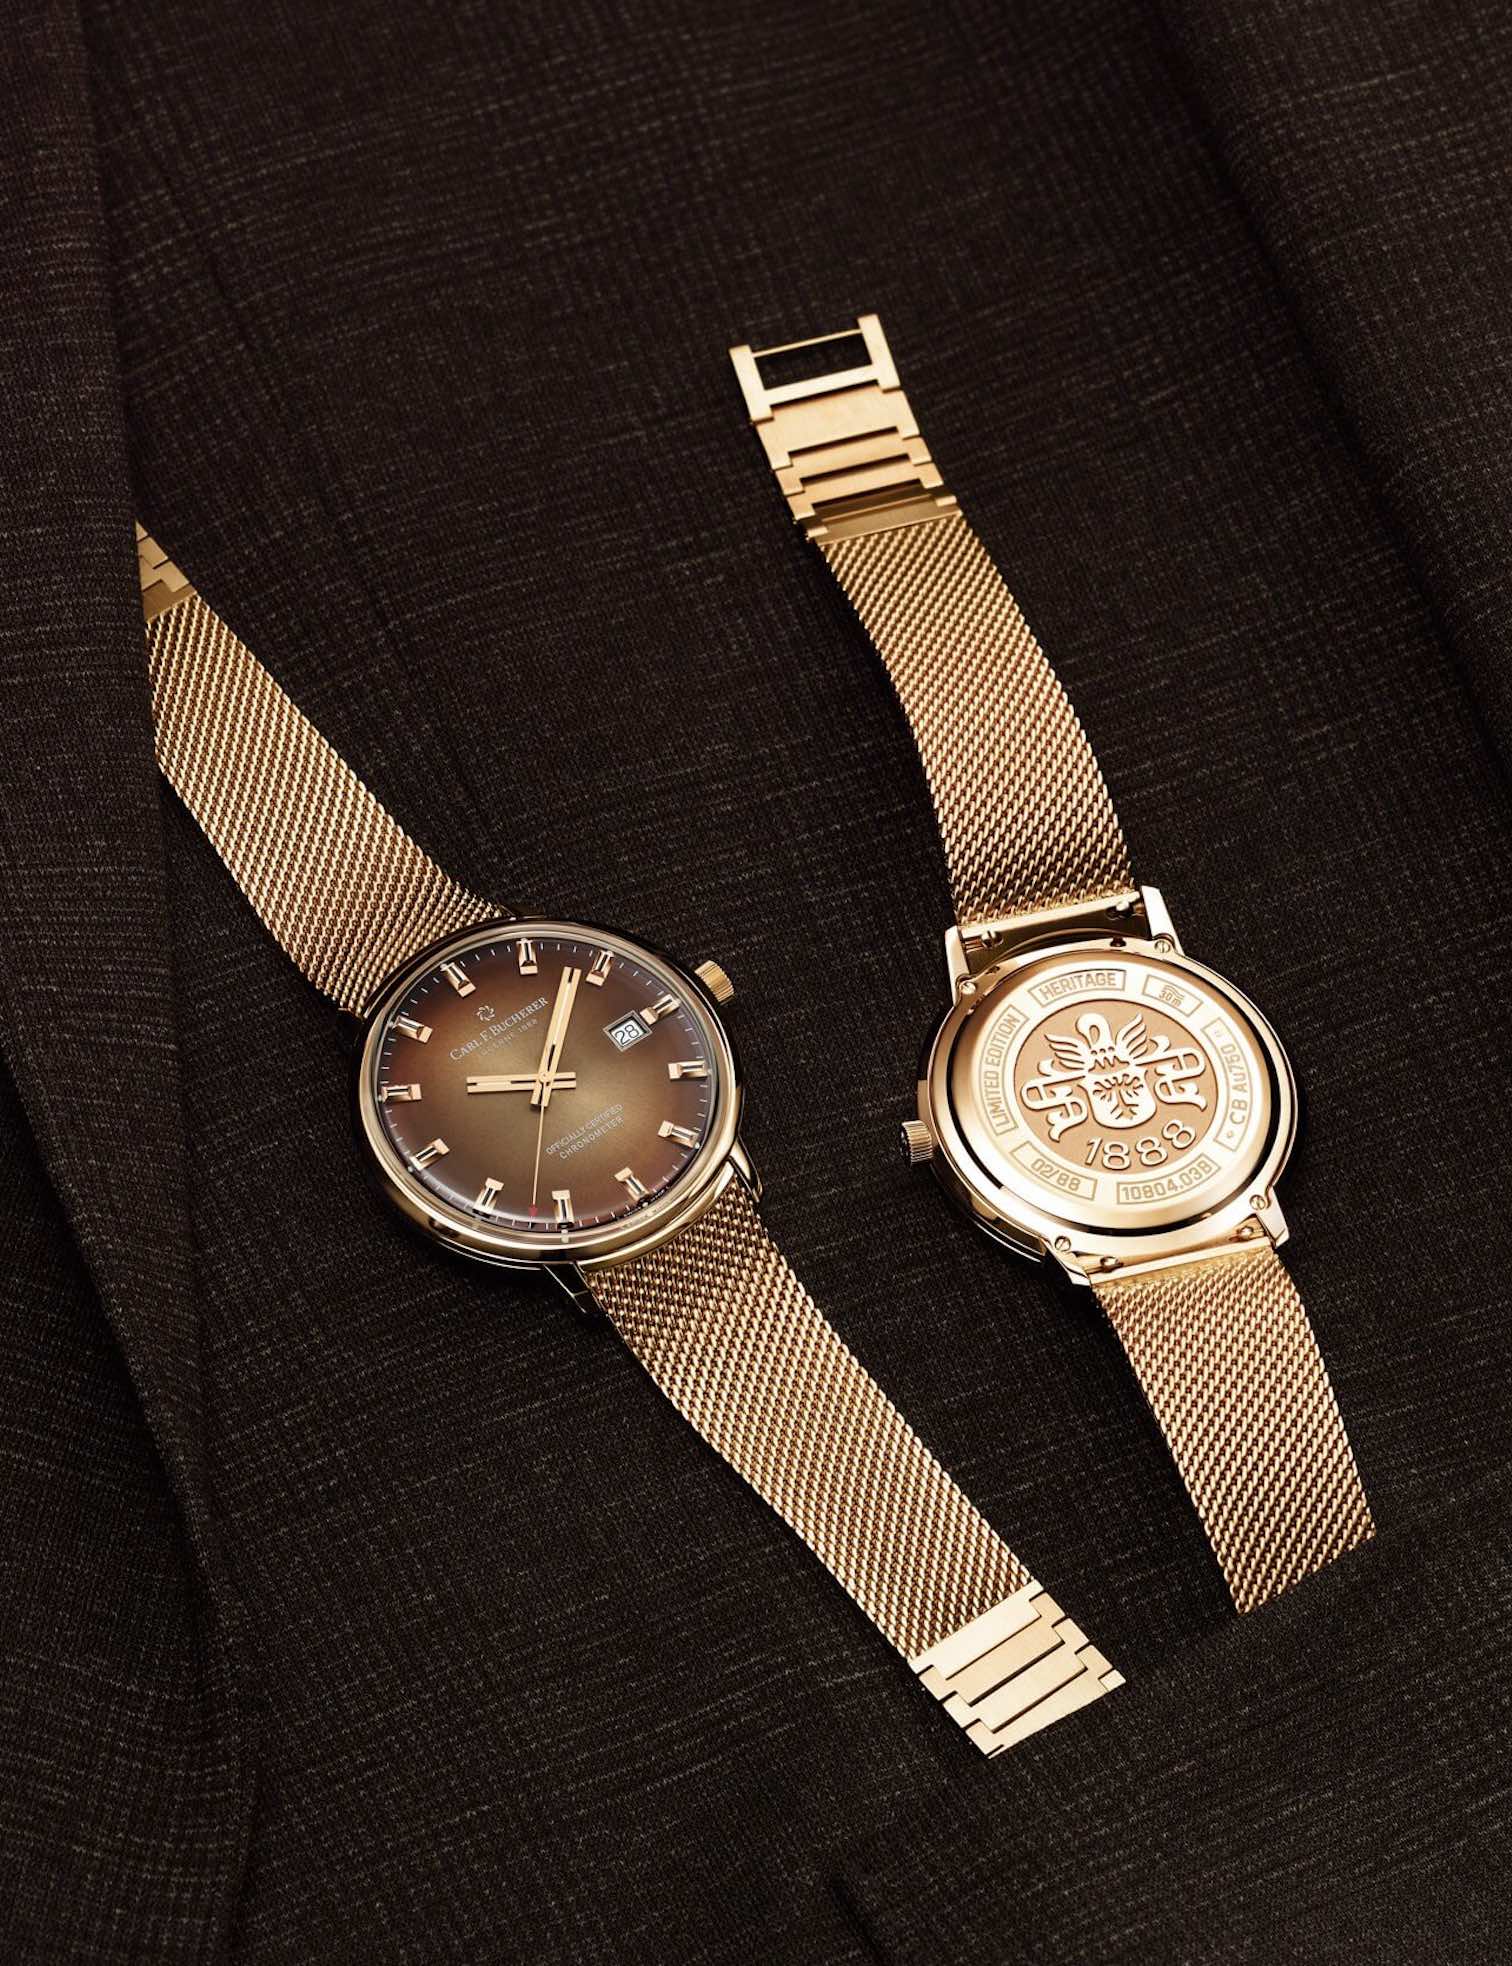 Swiss luxury watches Seven Friday to enter India, Retail News, ET Retail